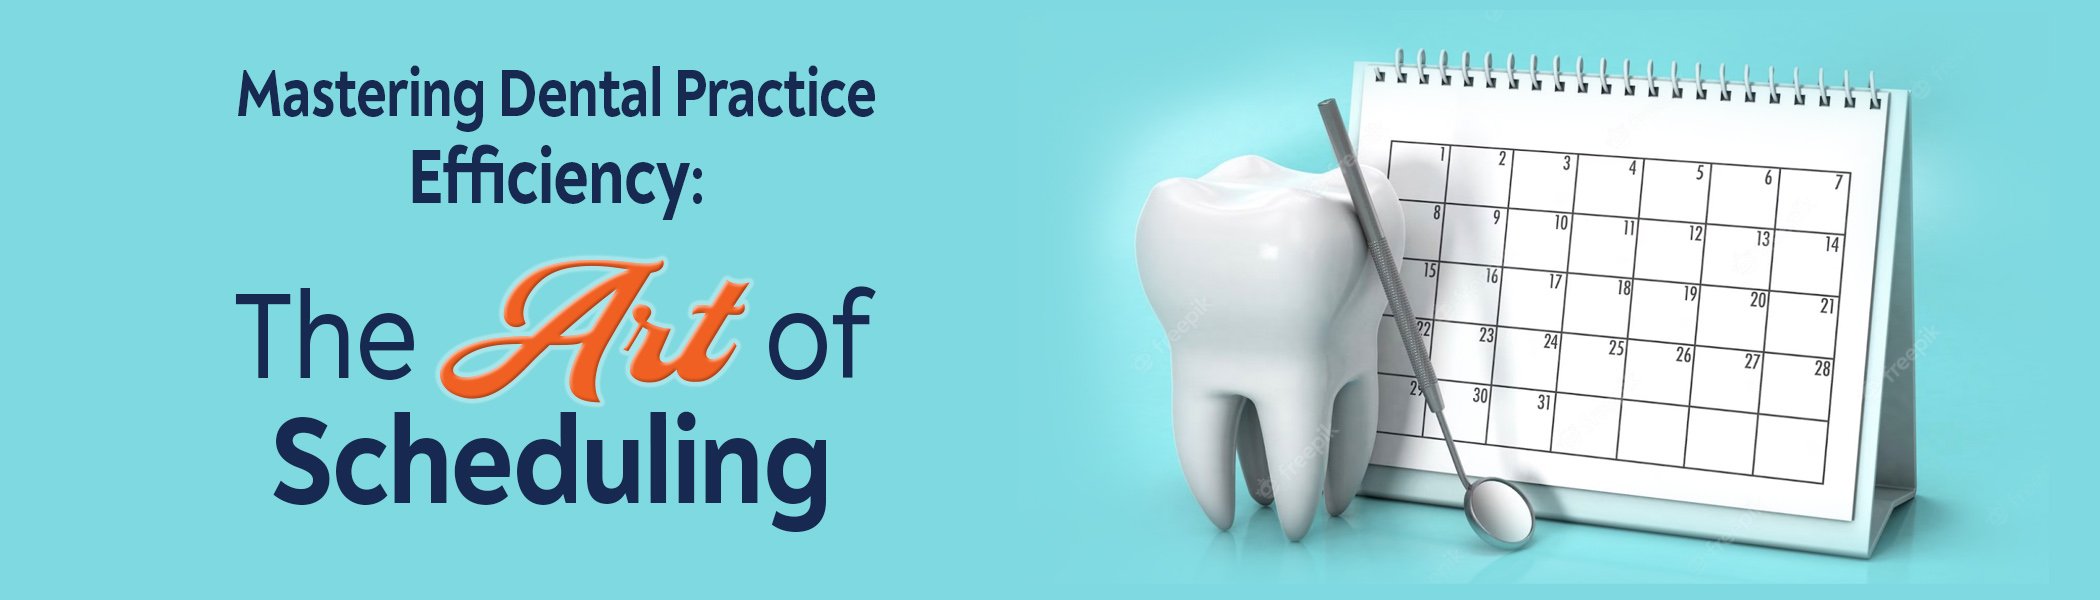 Mastering Dental Practice Efficiency: The Art of Scheduling